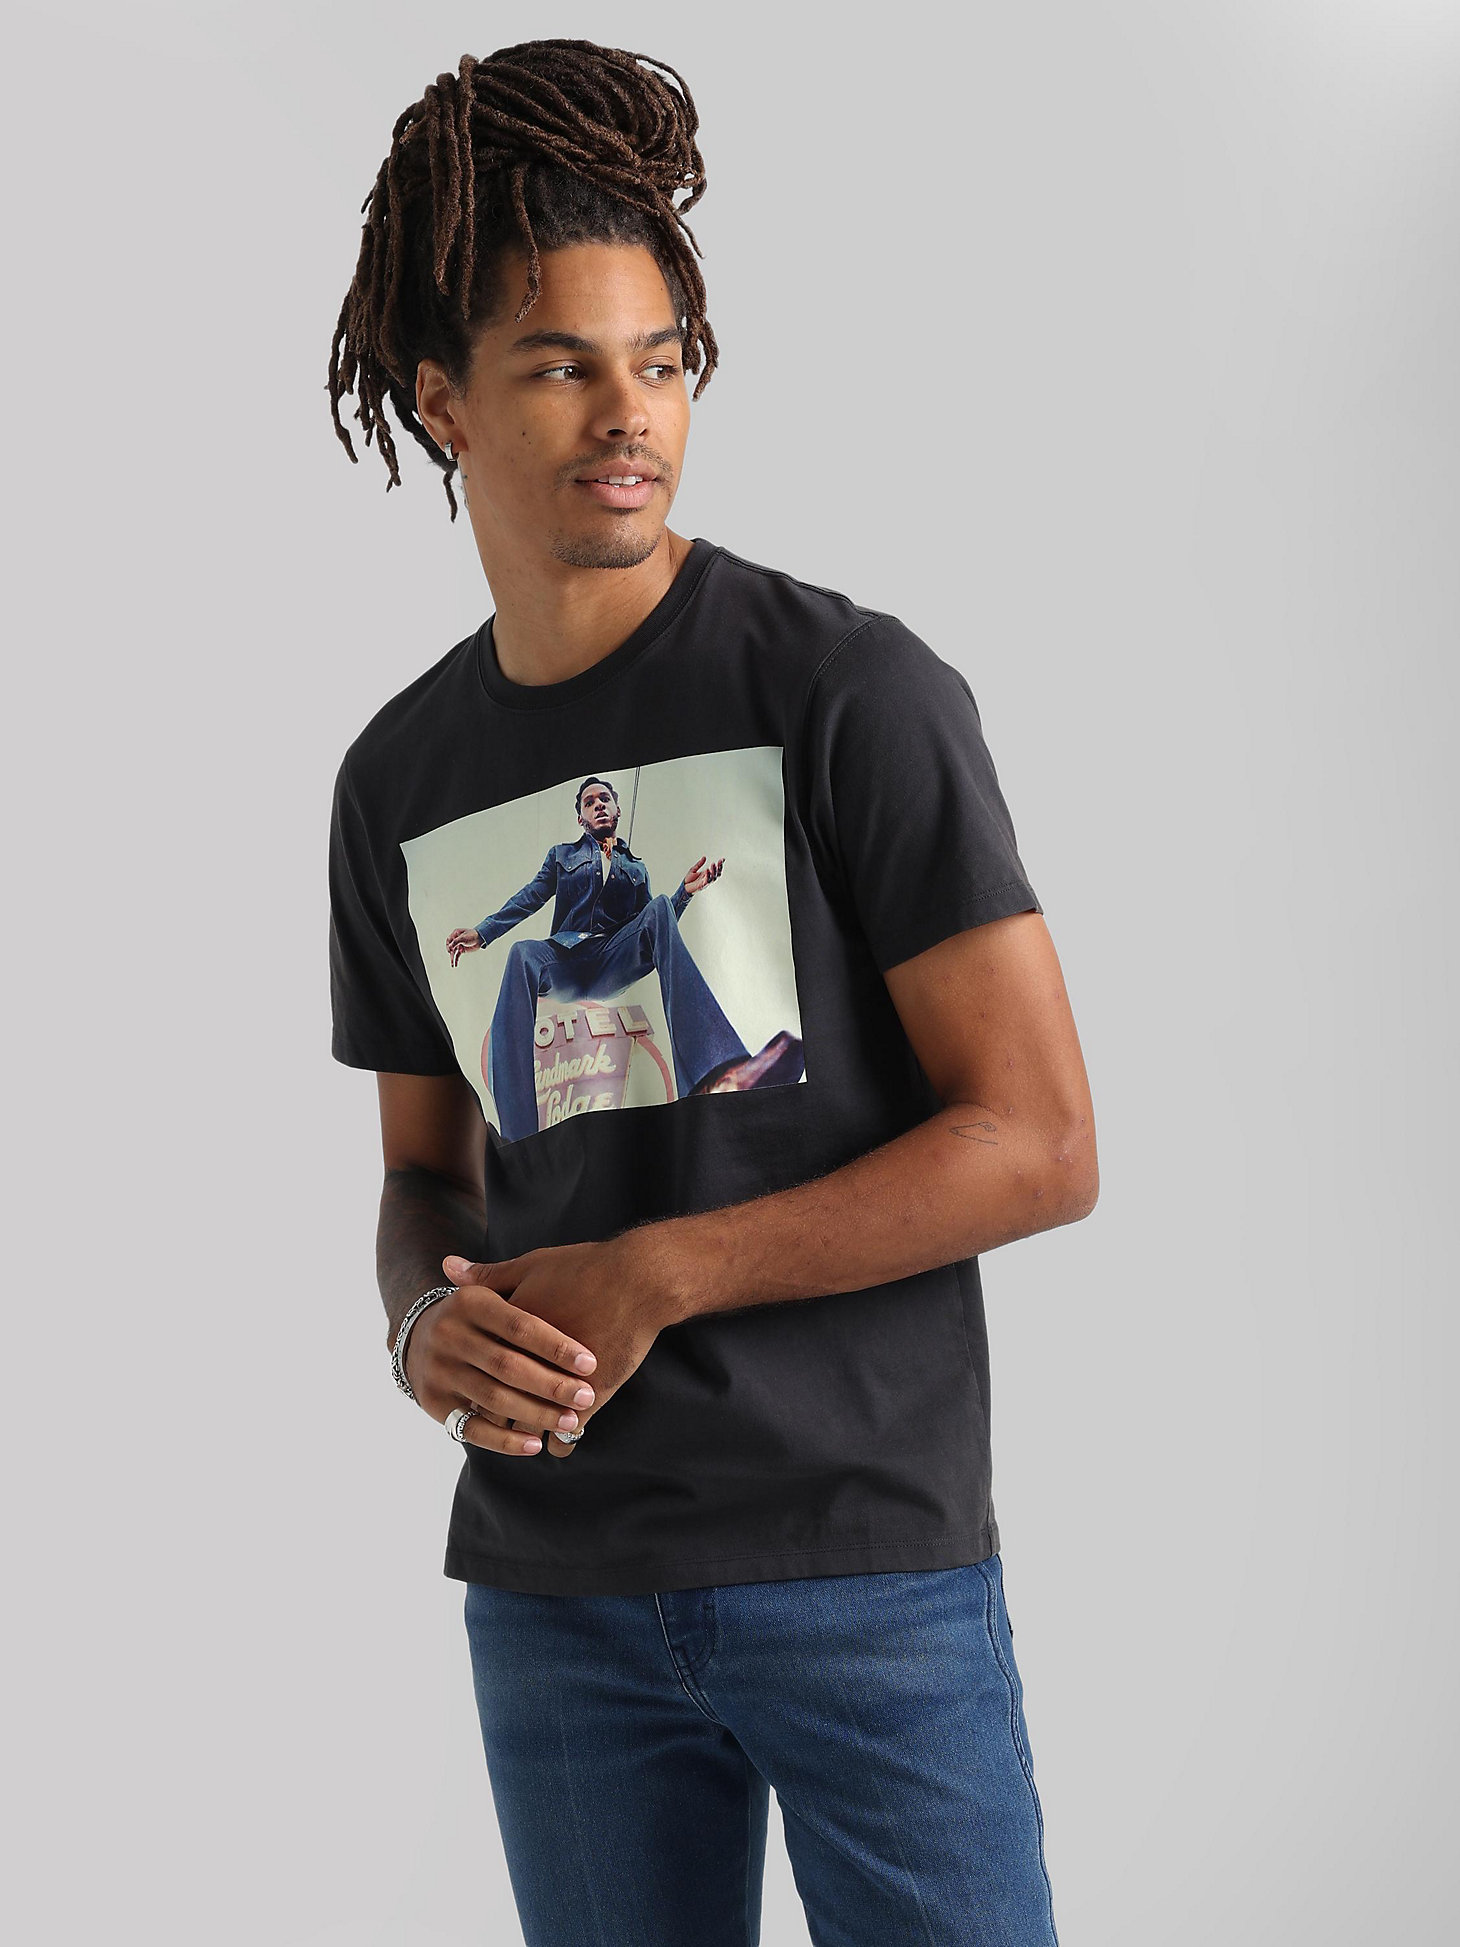 Wrangler X Leon Bridges Men's Graphic T-Shirt in Faded Black main view